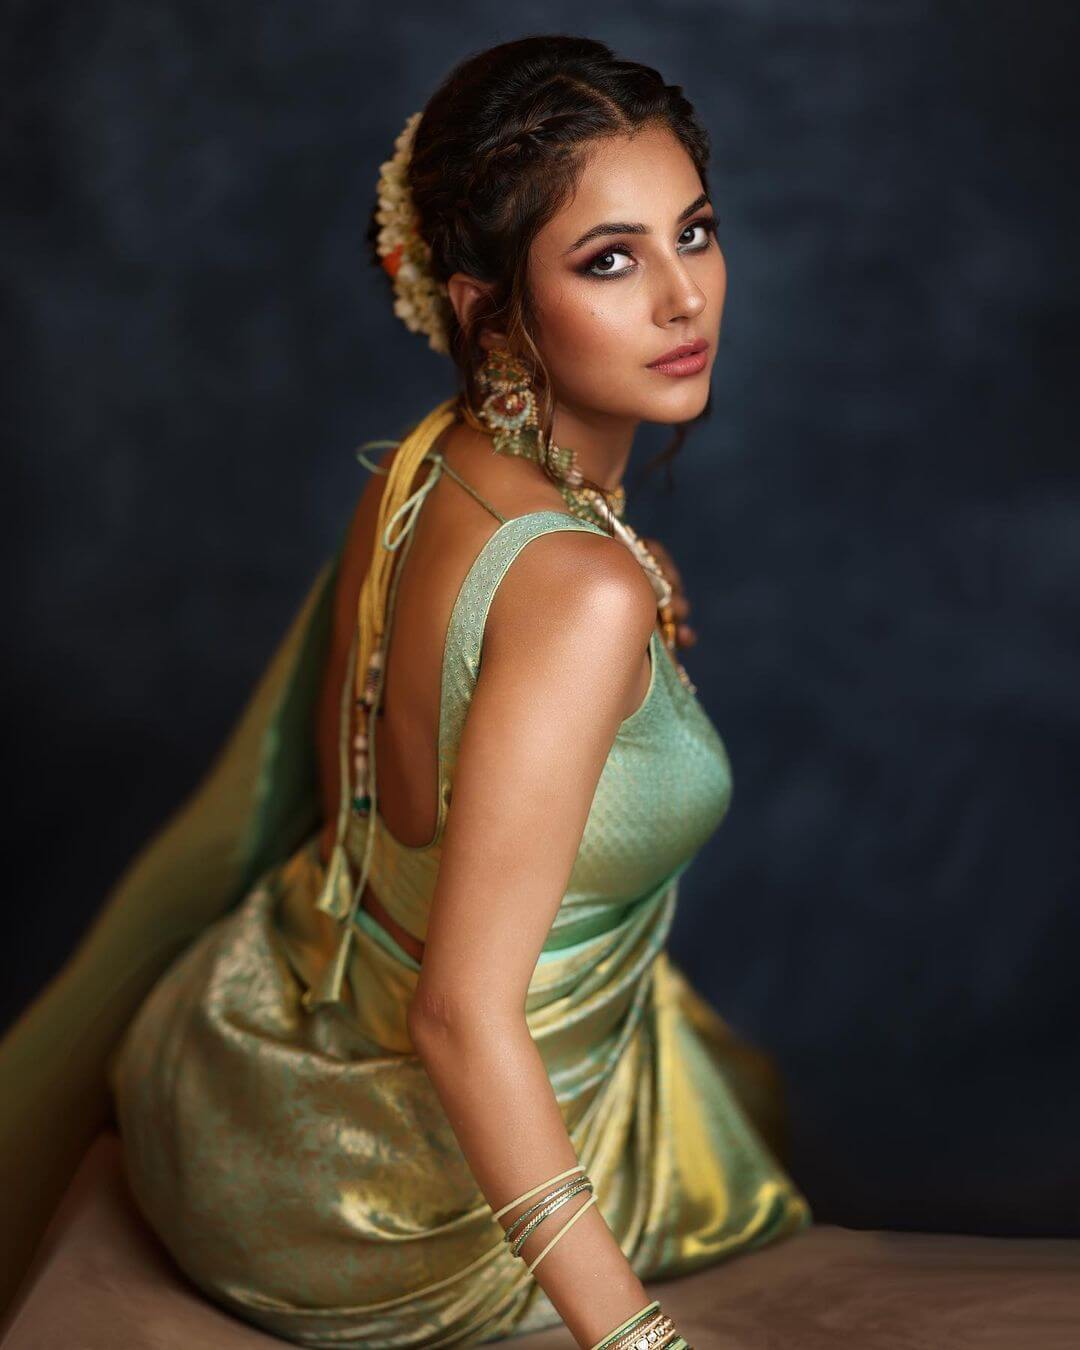 Shehnaaz Gill's Glamorous Traditional Saree Look For South Filmfare Awards